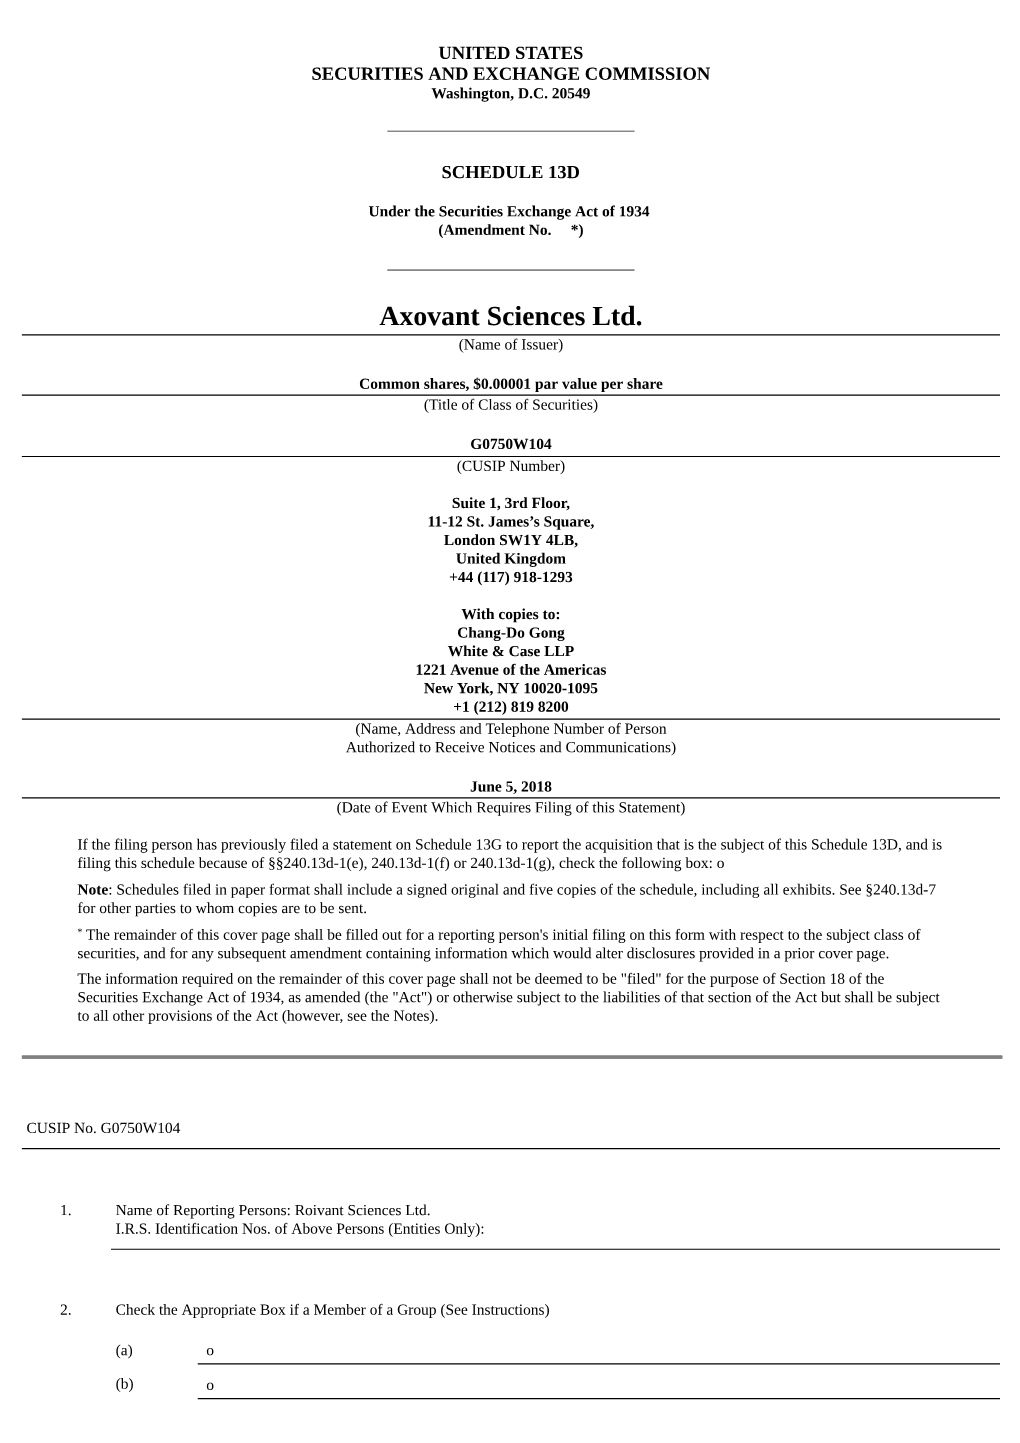 Axovant Sciences Ltd. (Name of Issuer)